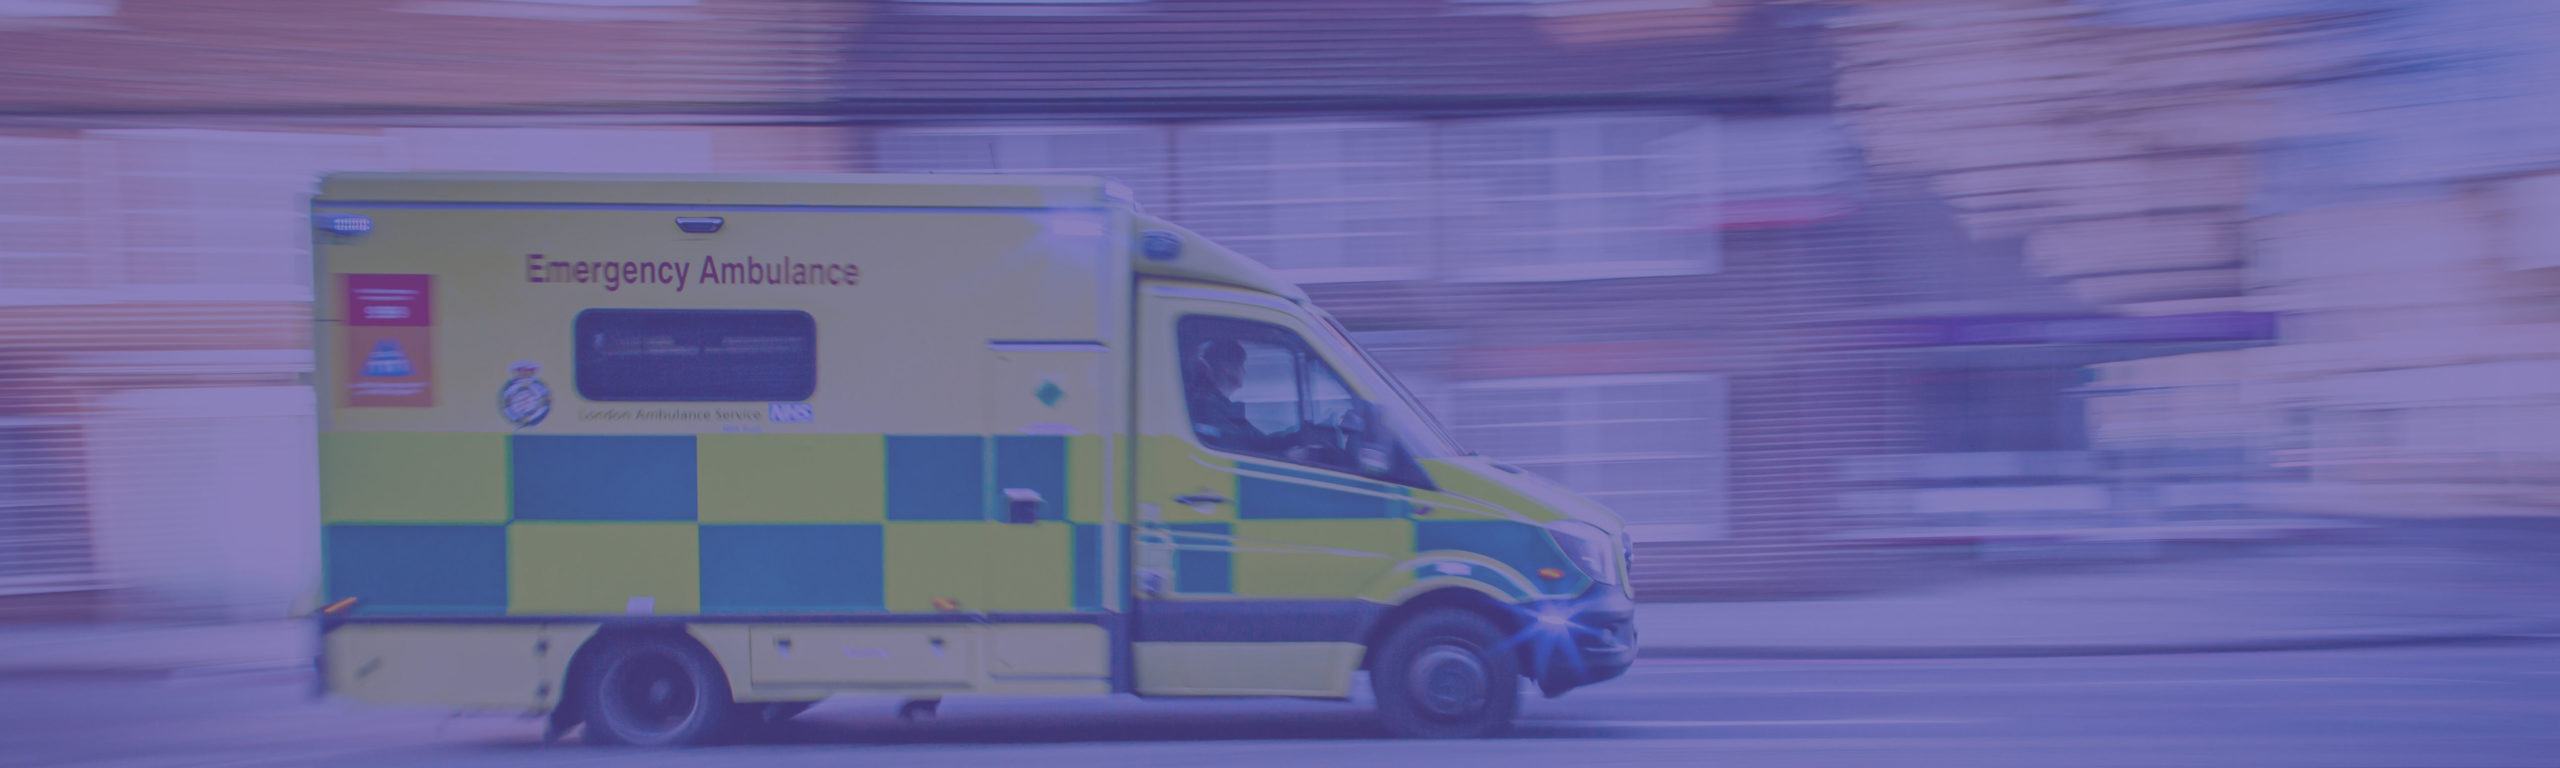 An emergency ambulance speeding along a suburban street